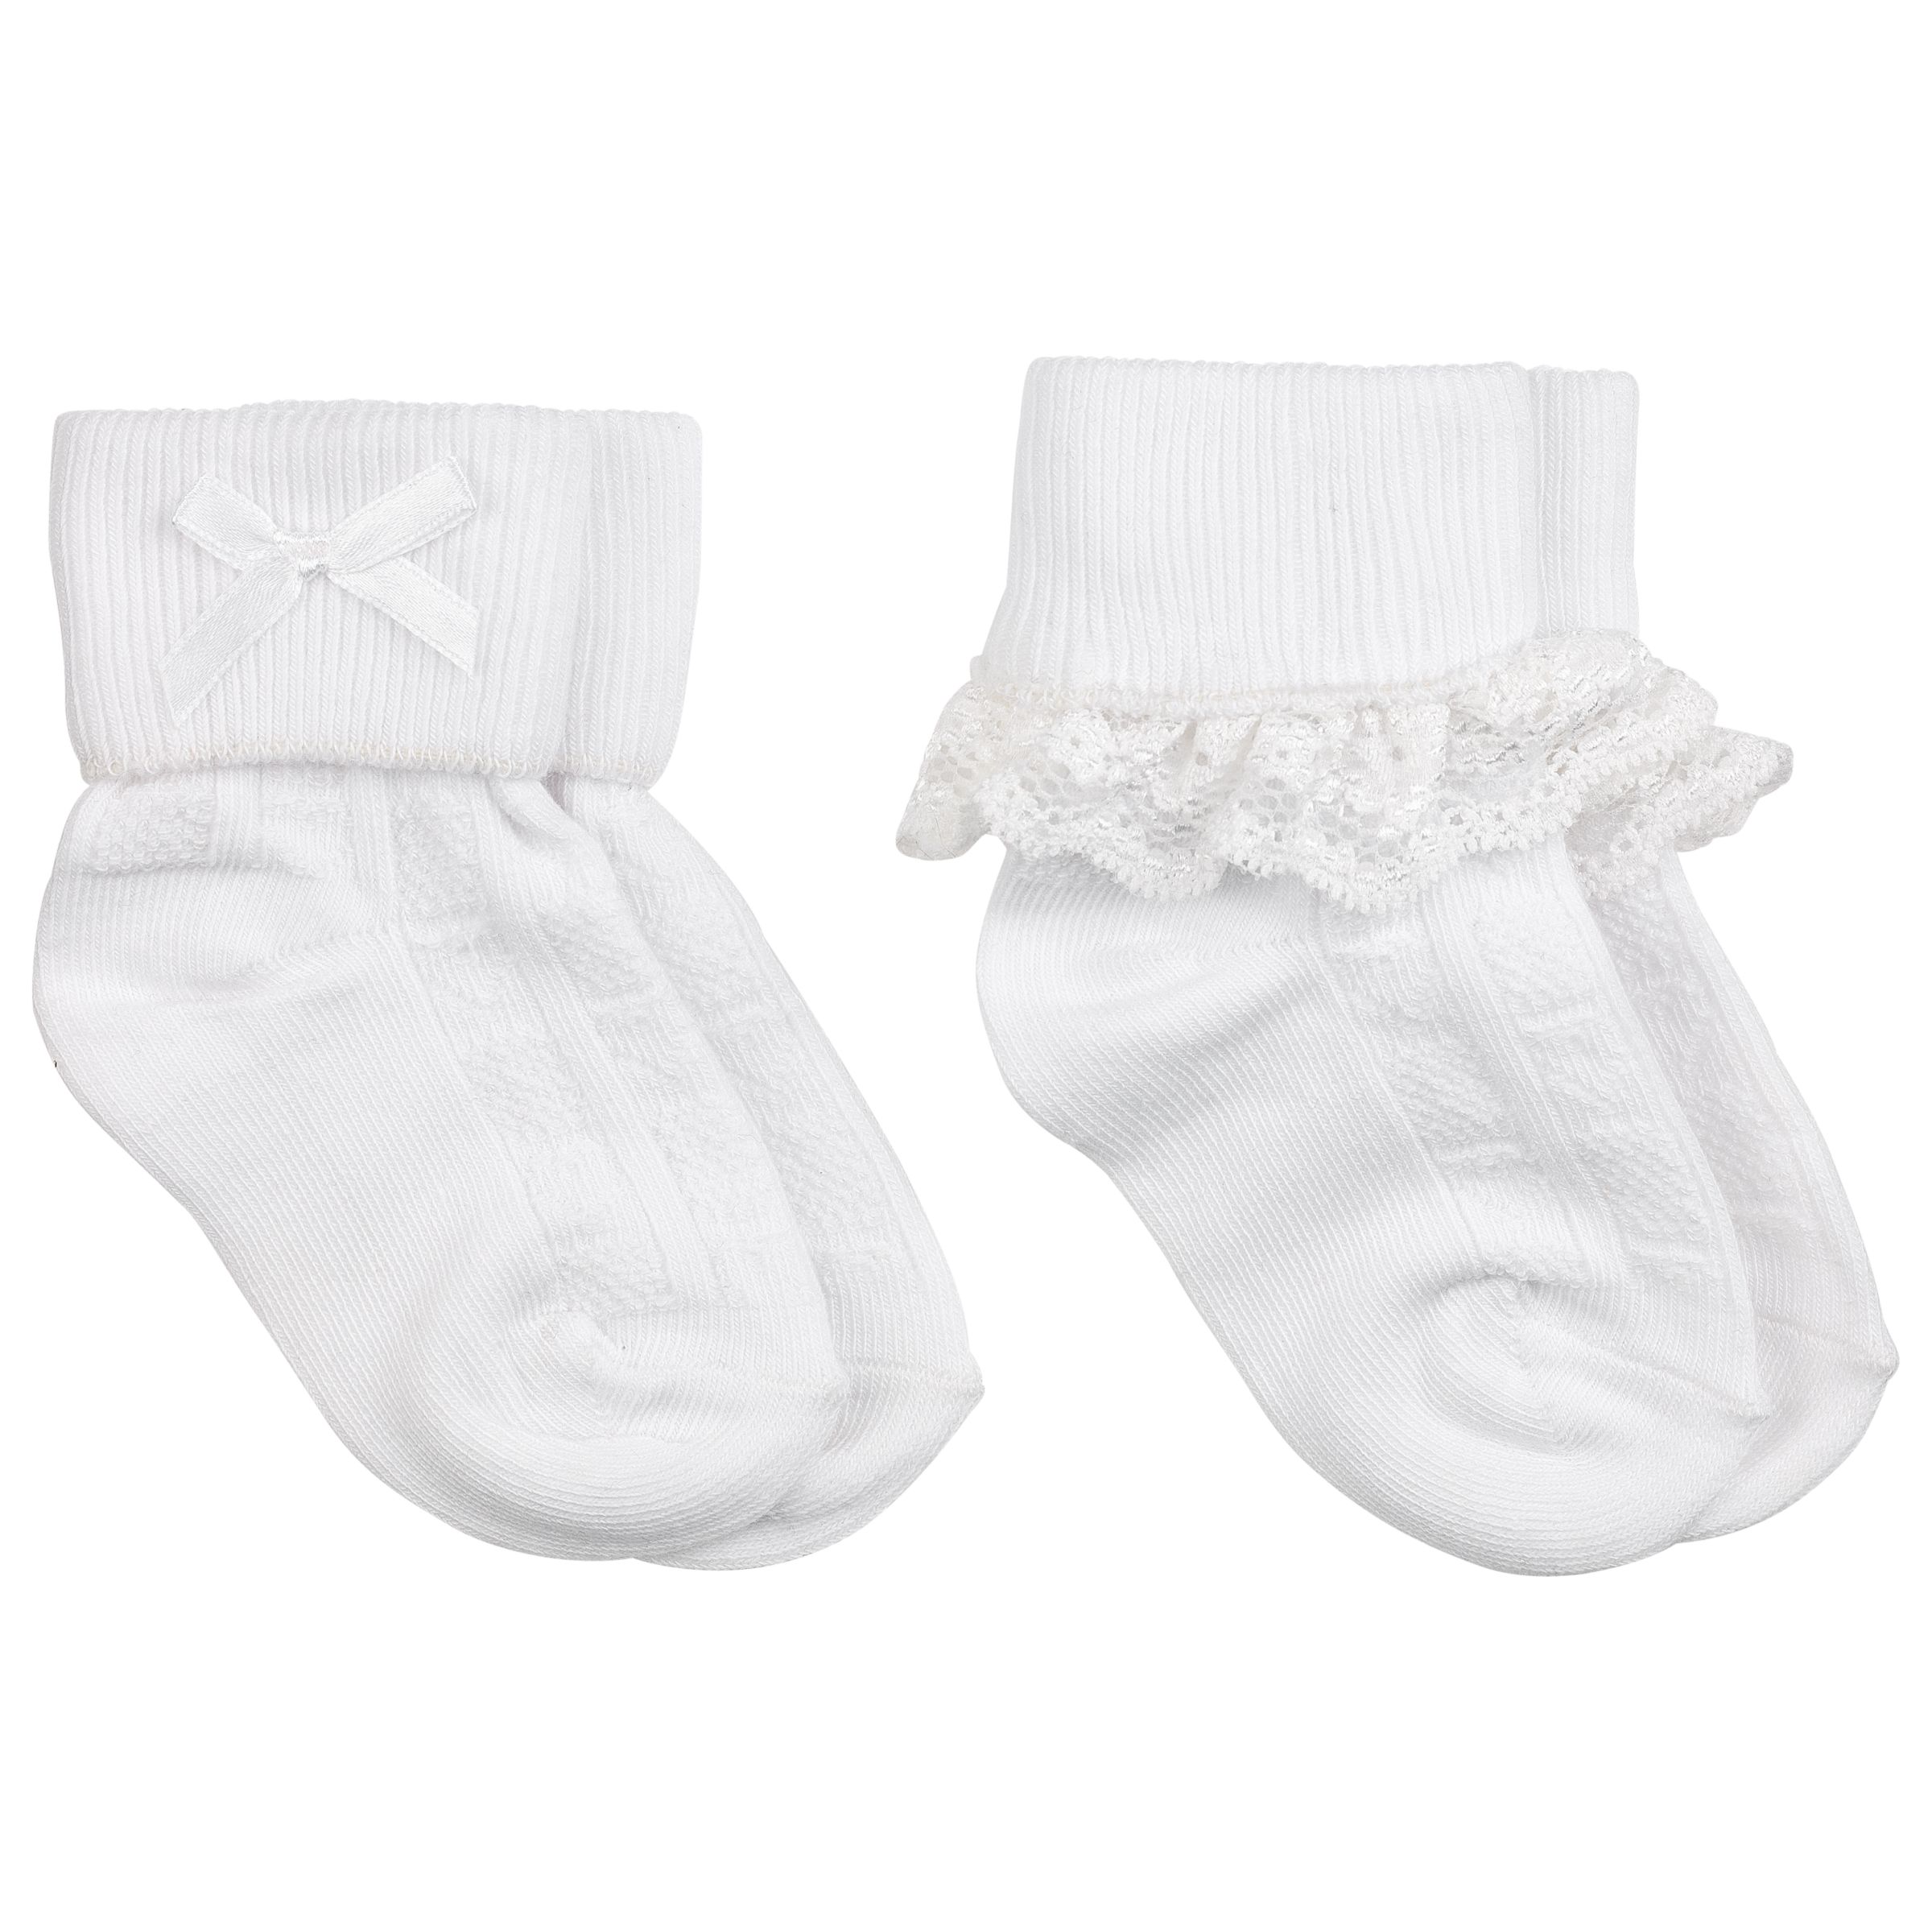 John Lewis Baby Lace Trim Socks, Pack of 2 43139